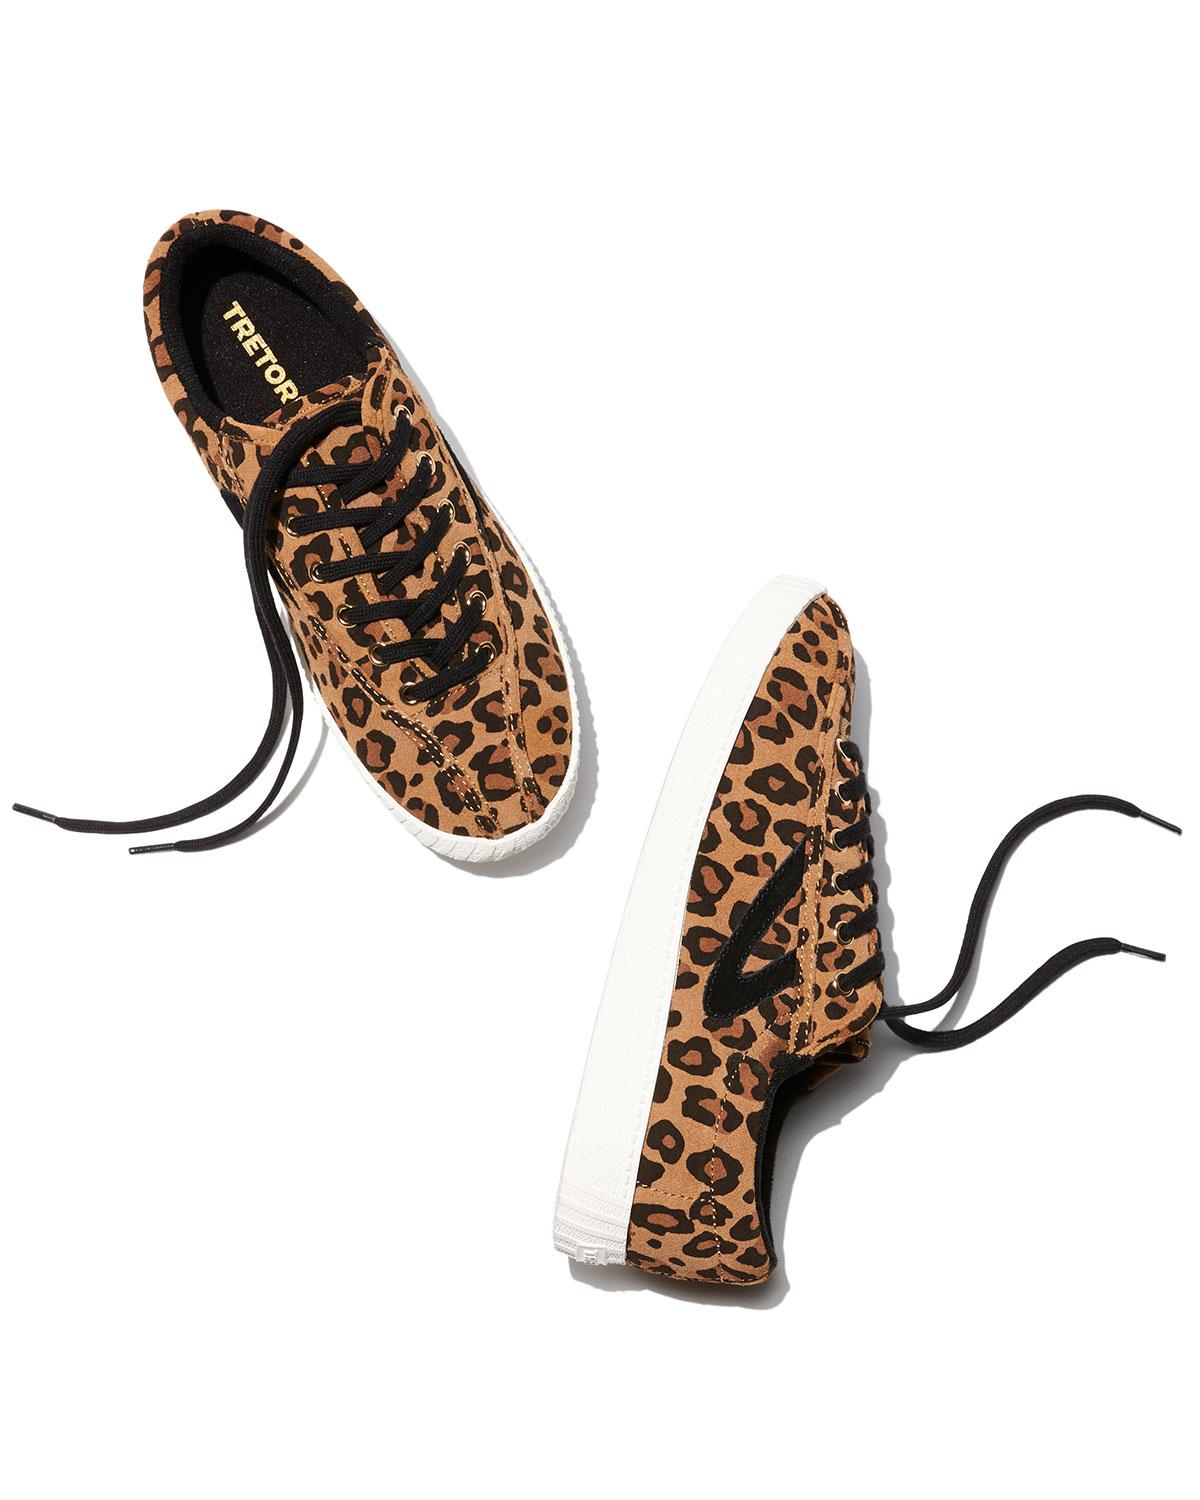 tretorn shoes leopard